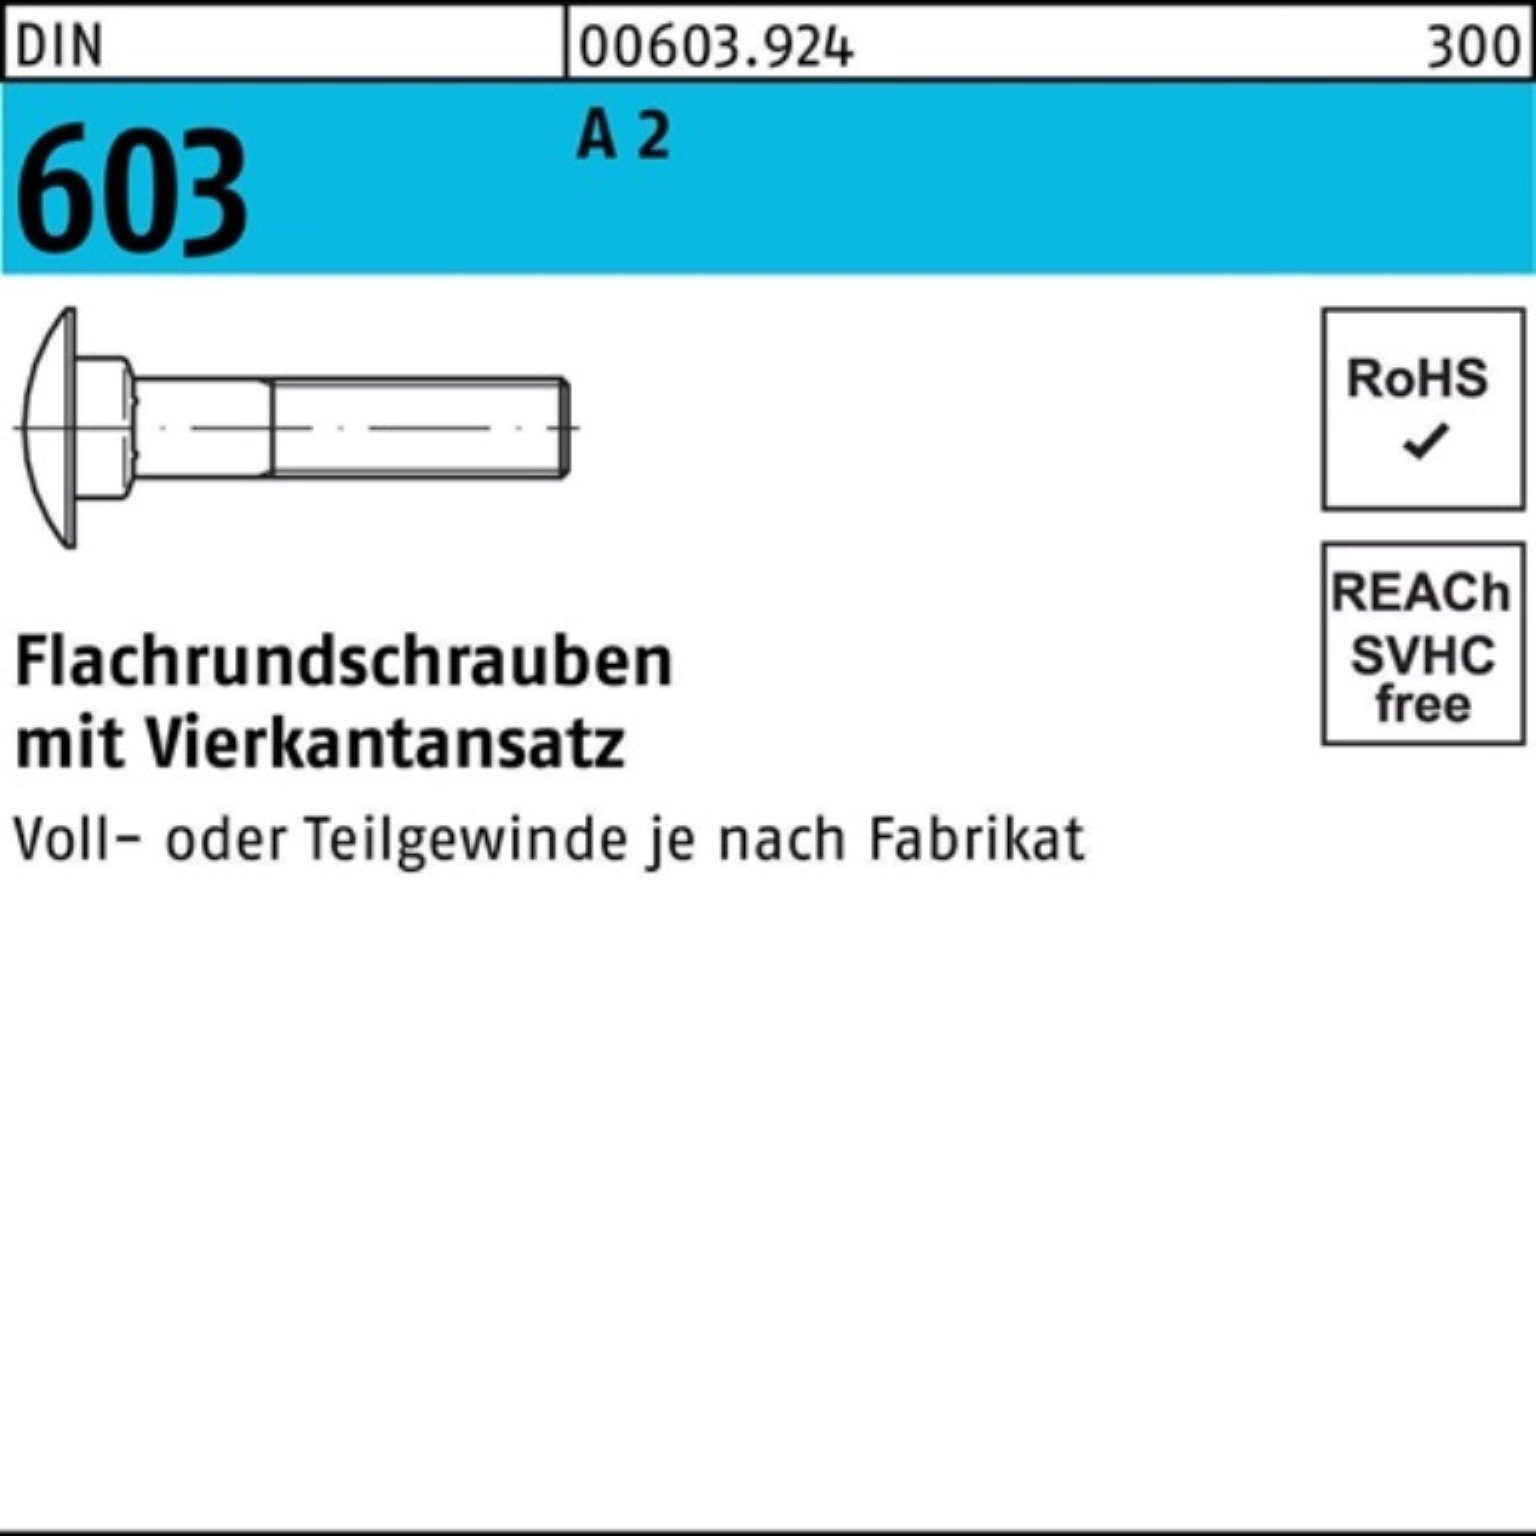 Reyher Schraube 100er Pack Flachrundschraube DIN 603 Vierkantansatz M10x 120 A 2 50 St